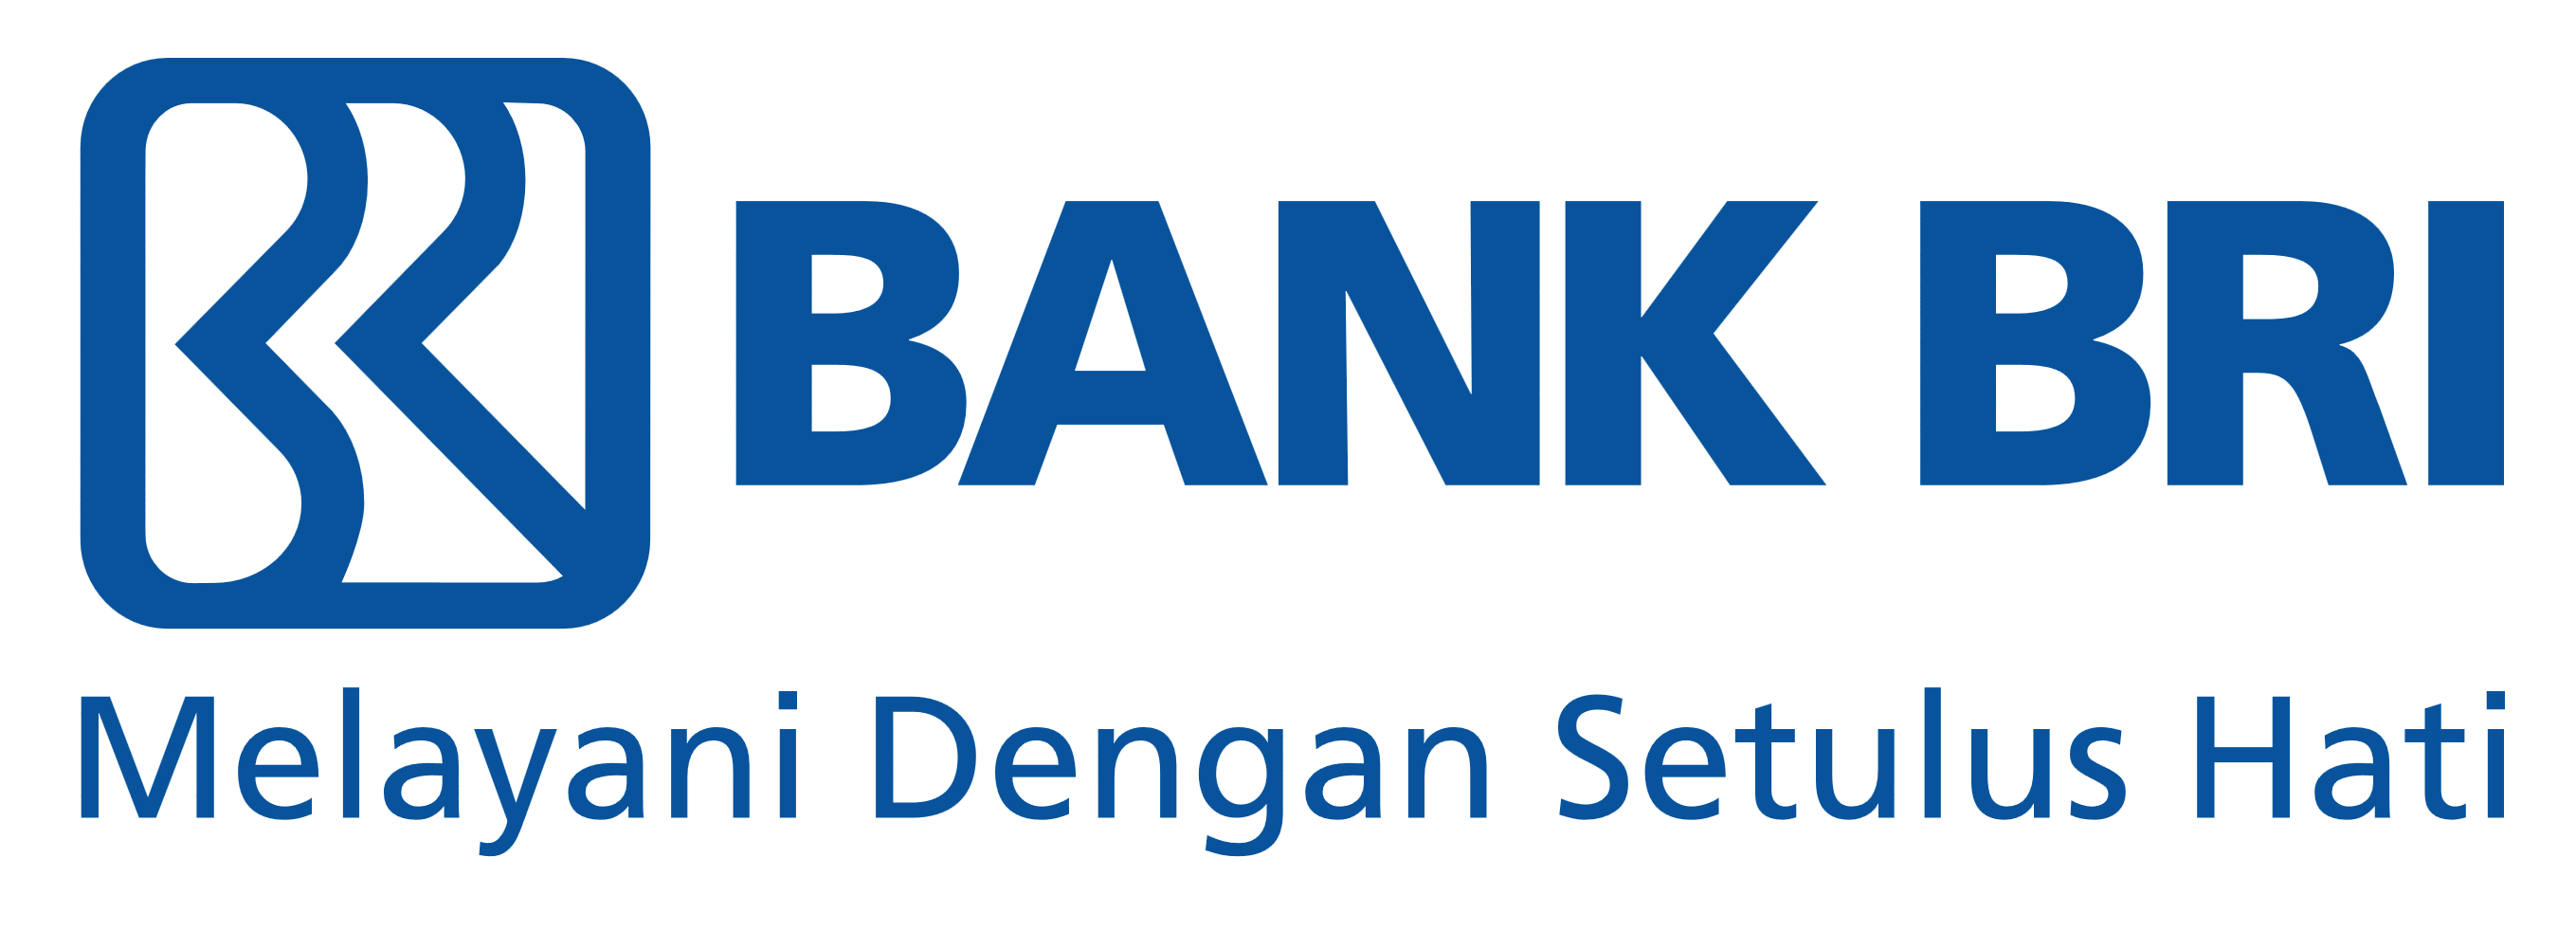 Bank_BRI_logo_Bank_Rakyat_Indonesia